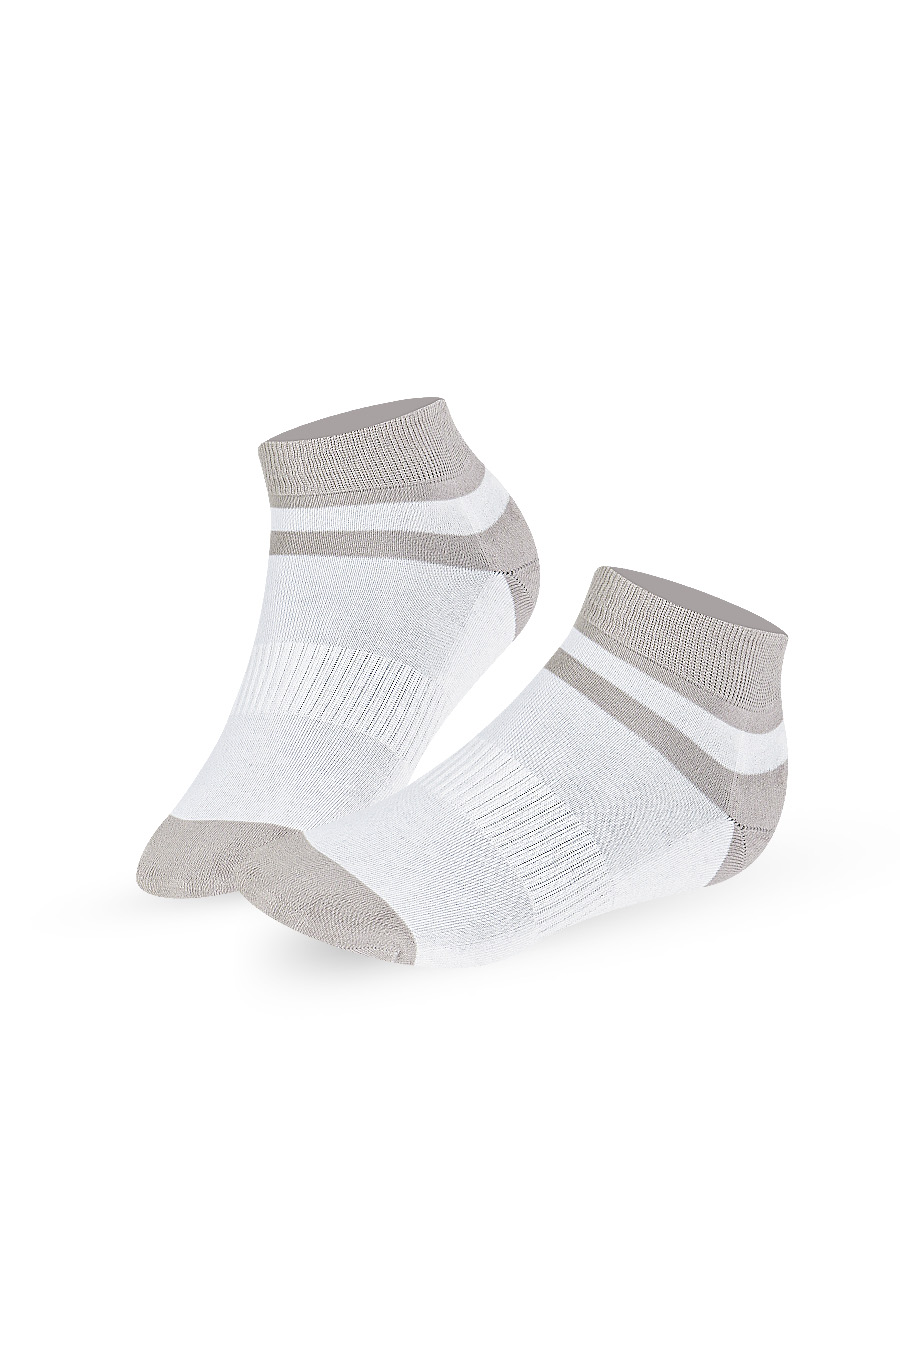 Socks X JEANS 16S13-WHITE